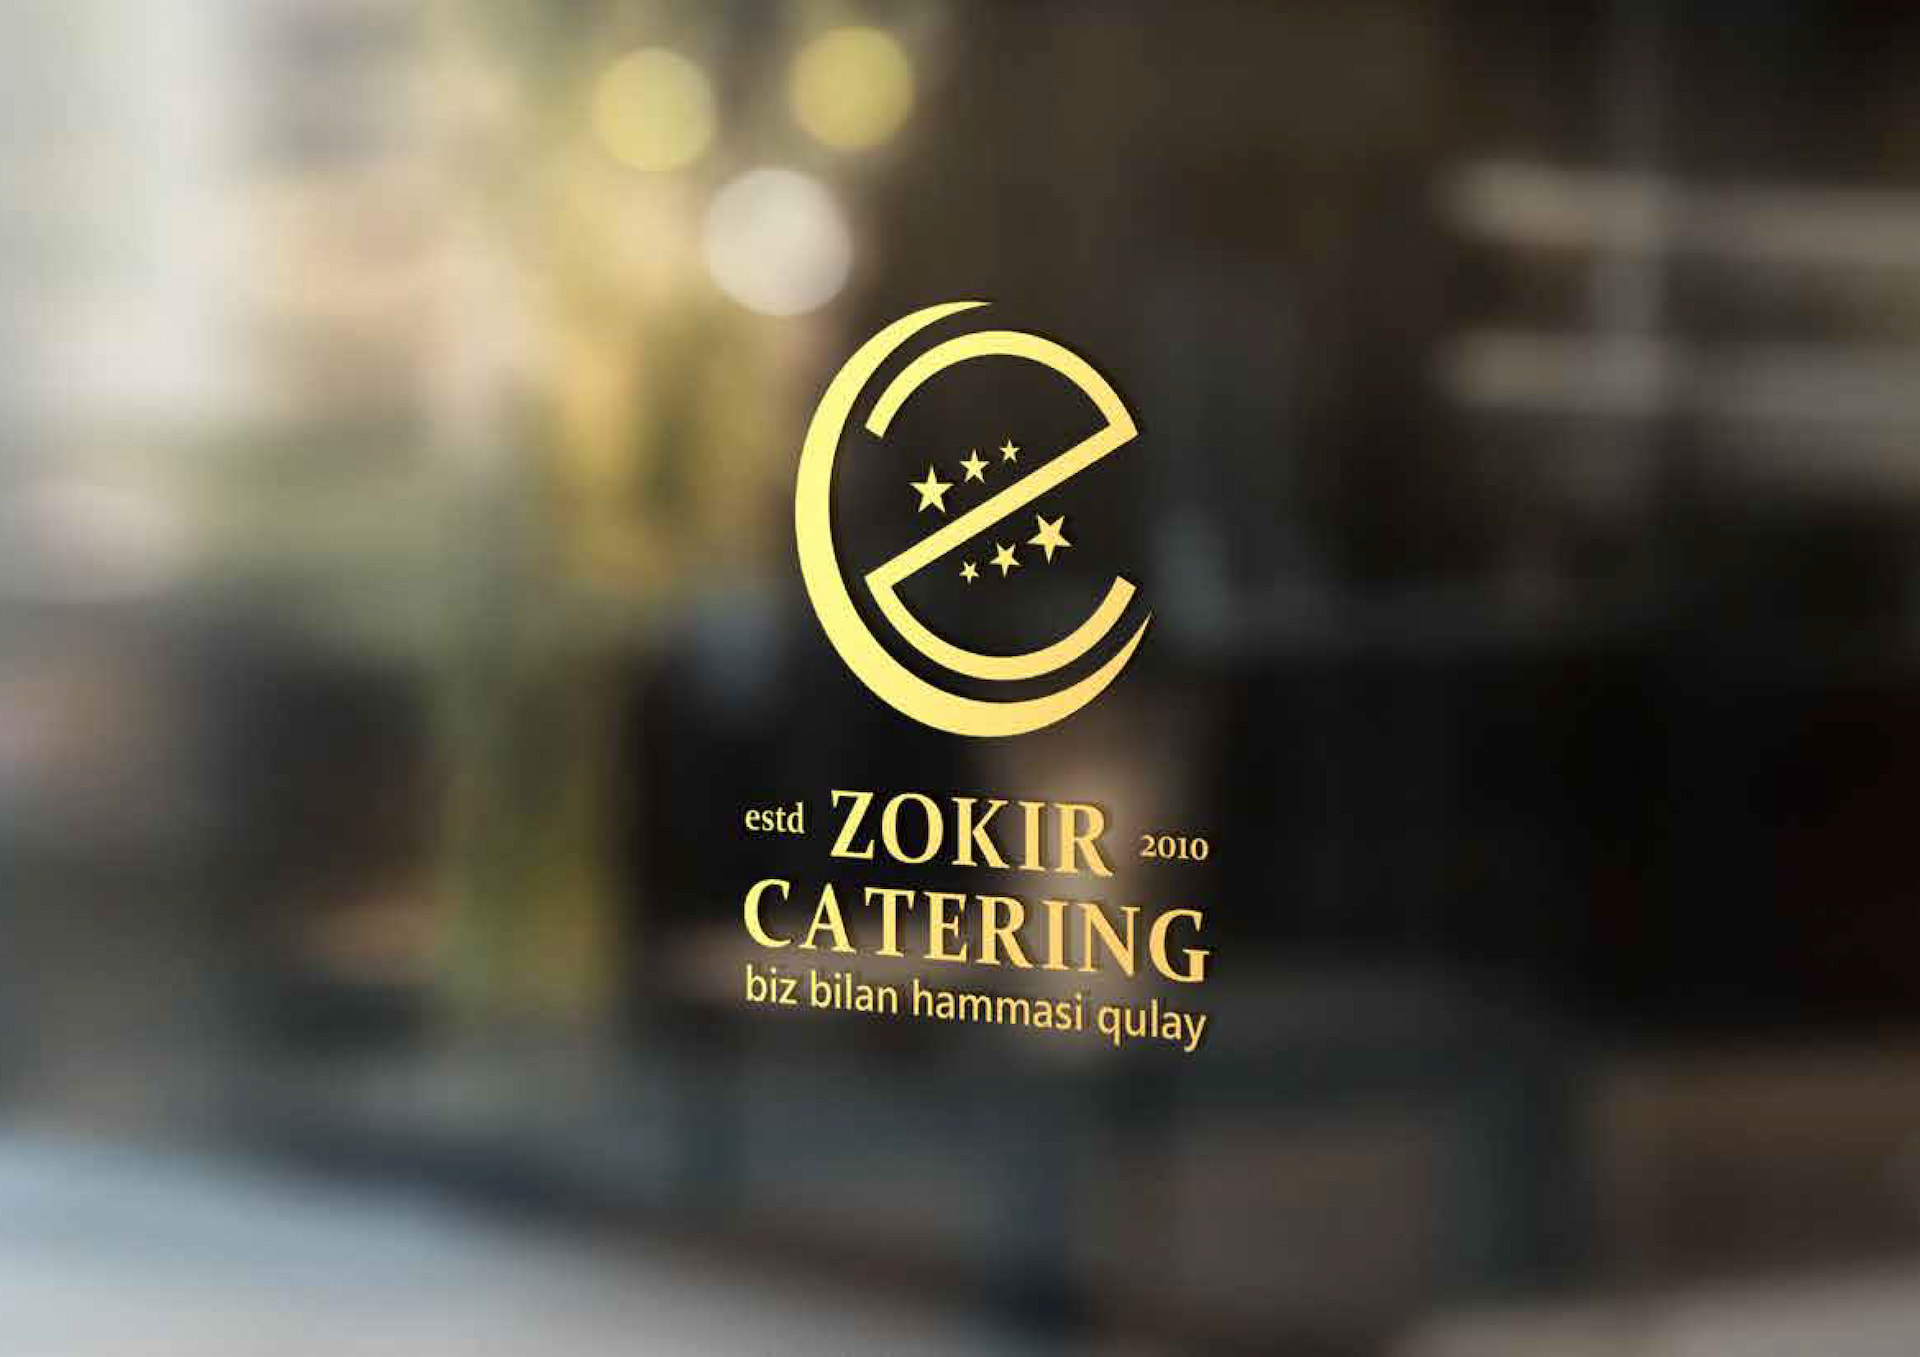 Zokir catering